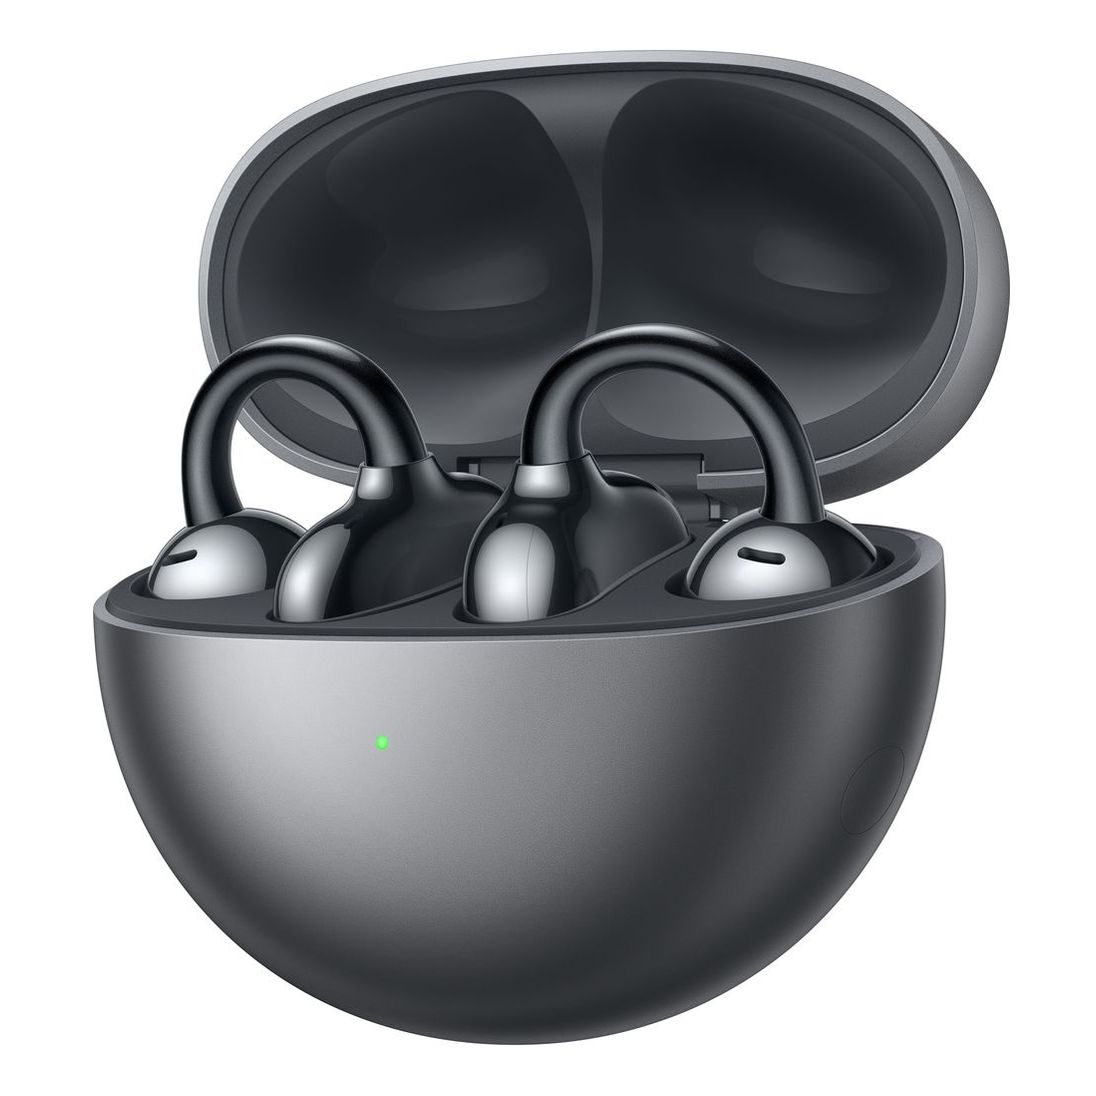 HUAWEI FreeClip Open-ear True Wireless Earbuds With Wireless Charge Case - Black